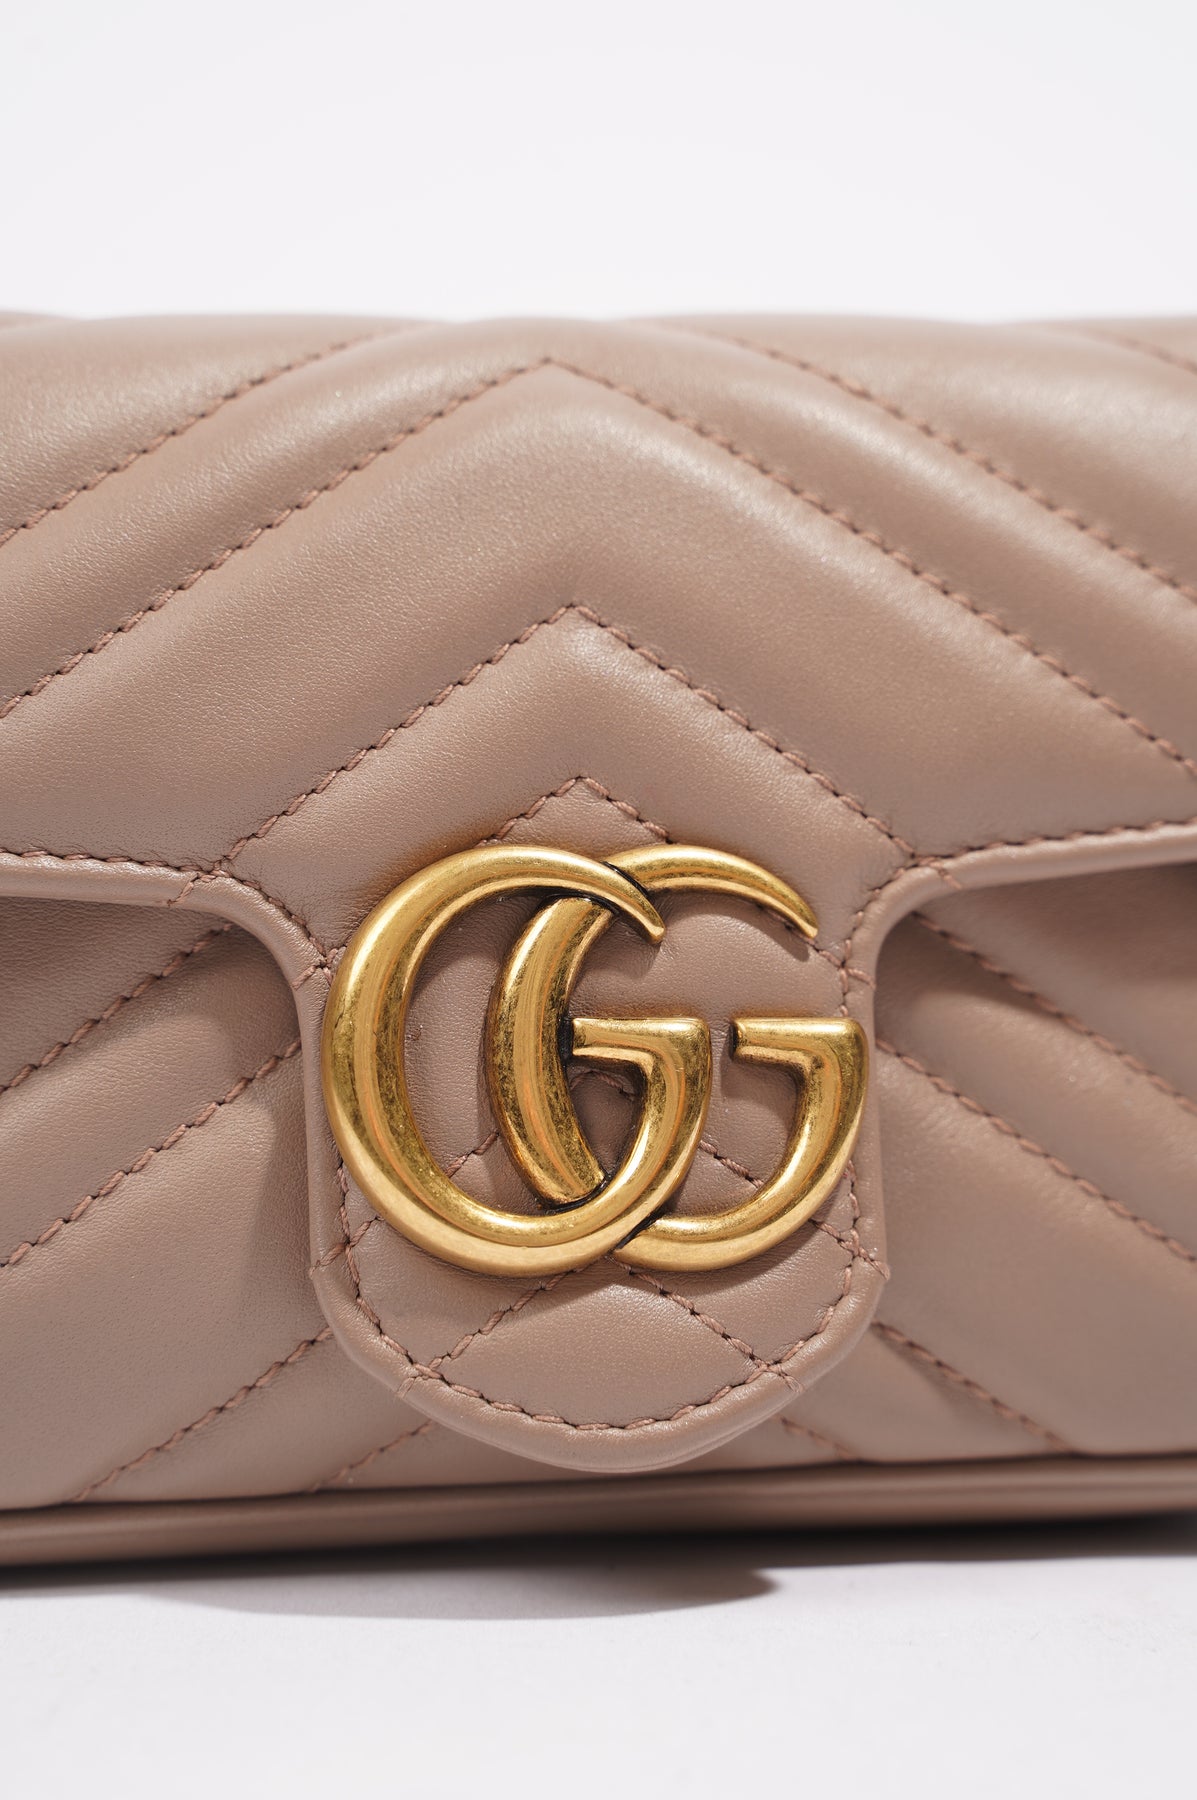 Pink GG Marmont mini matelassé-leather cross-body bag